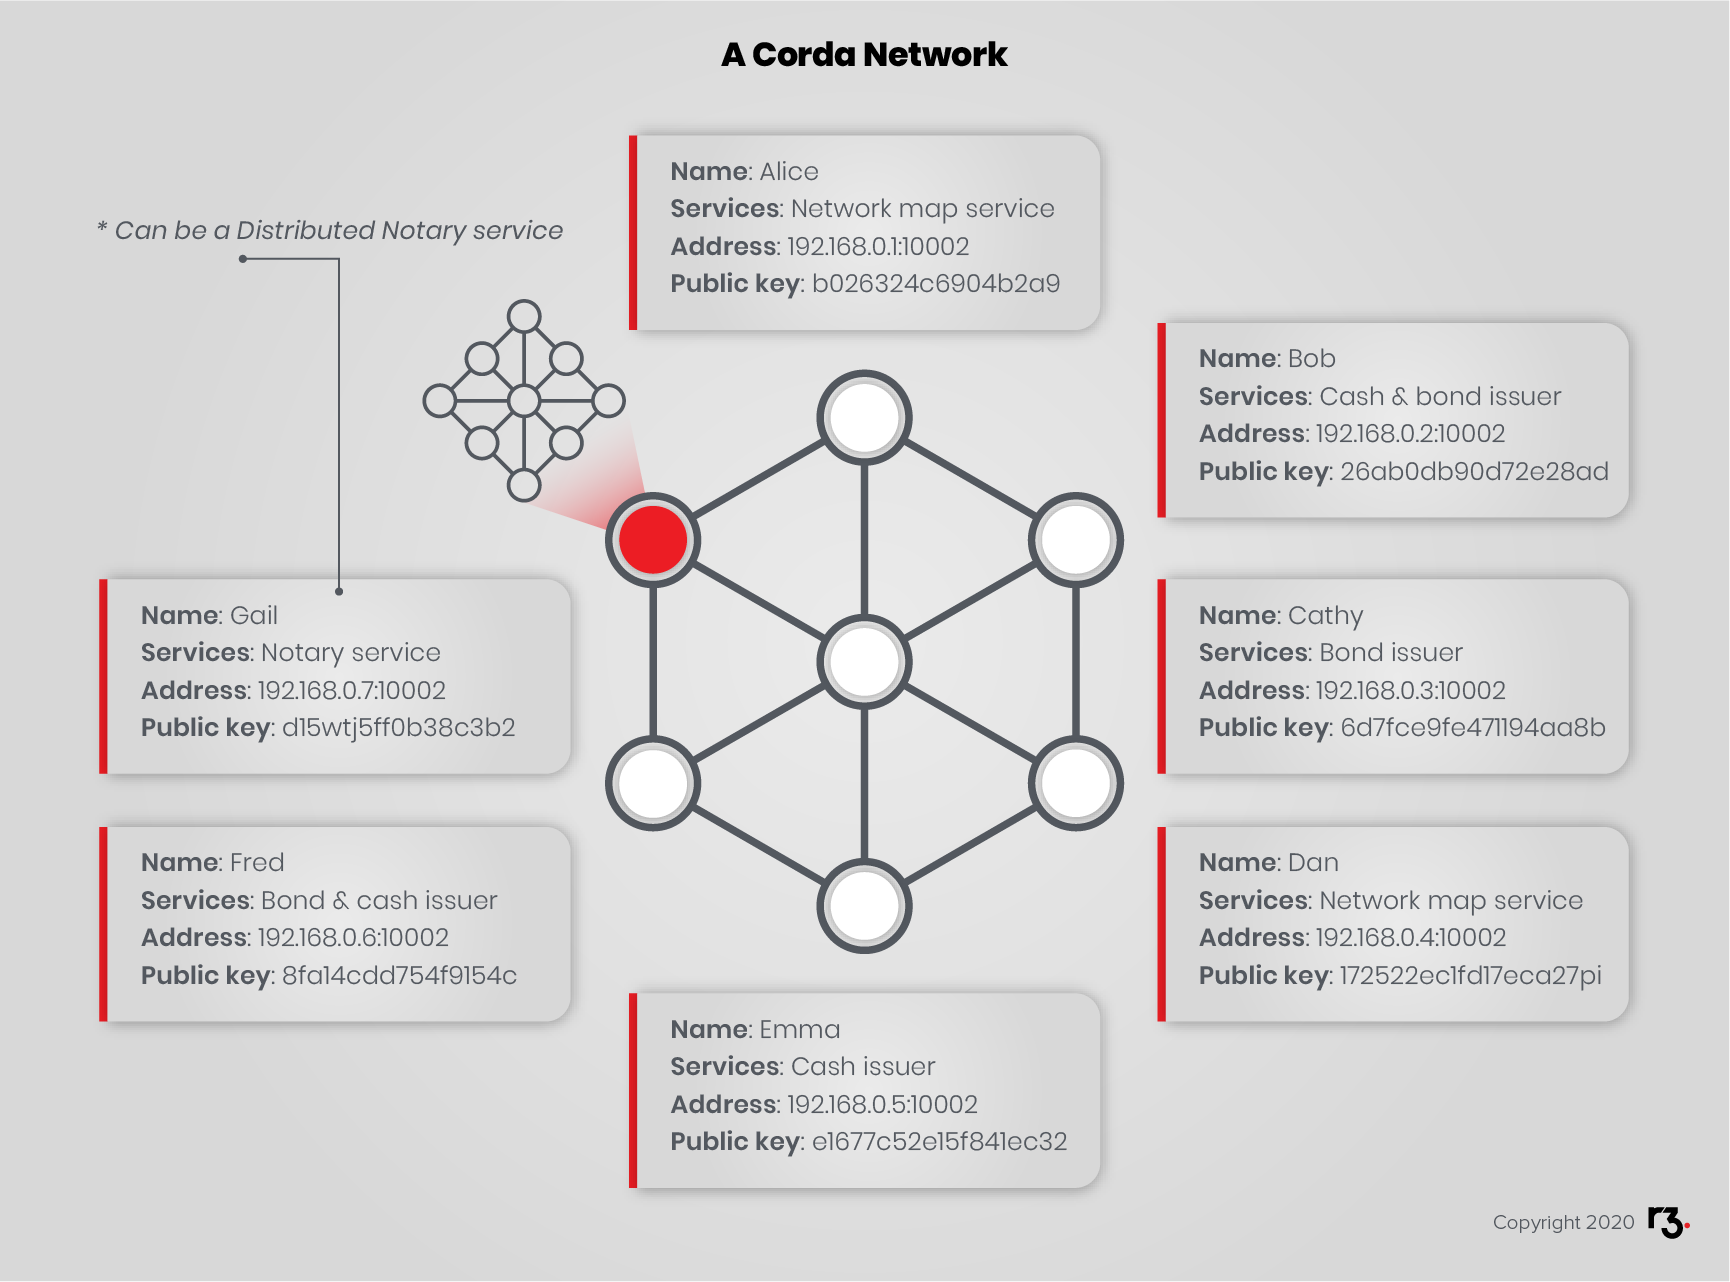 A Corda Network